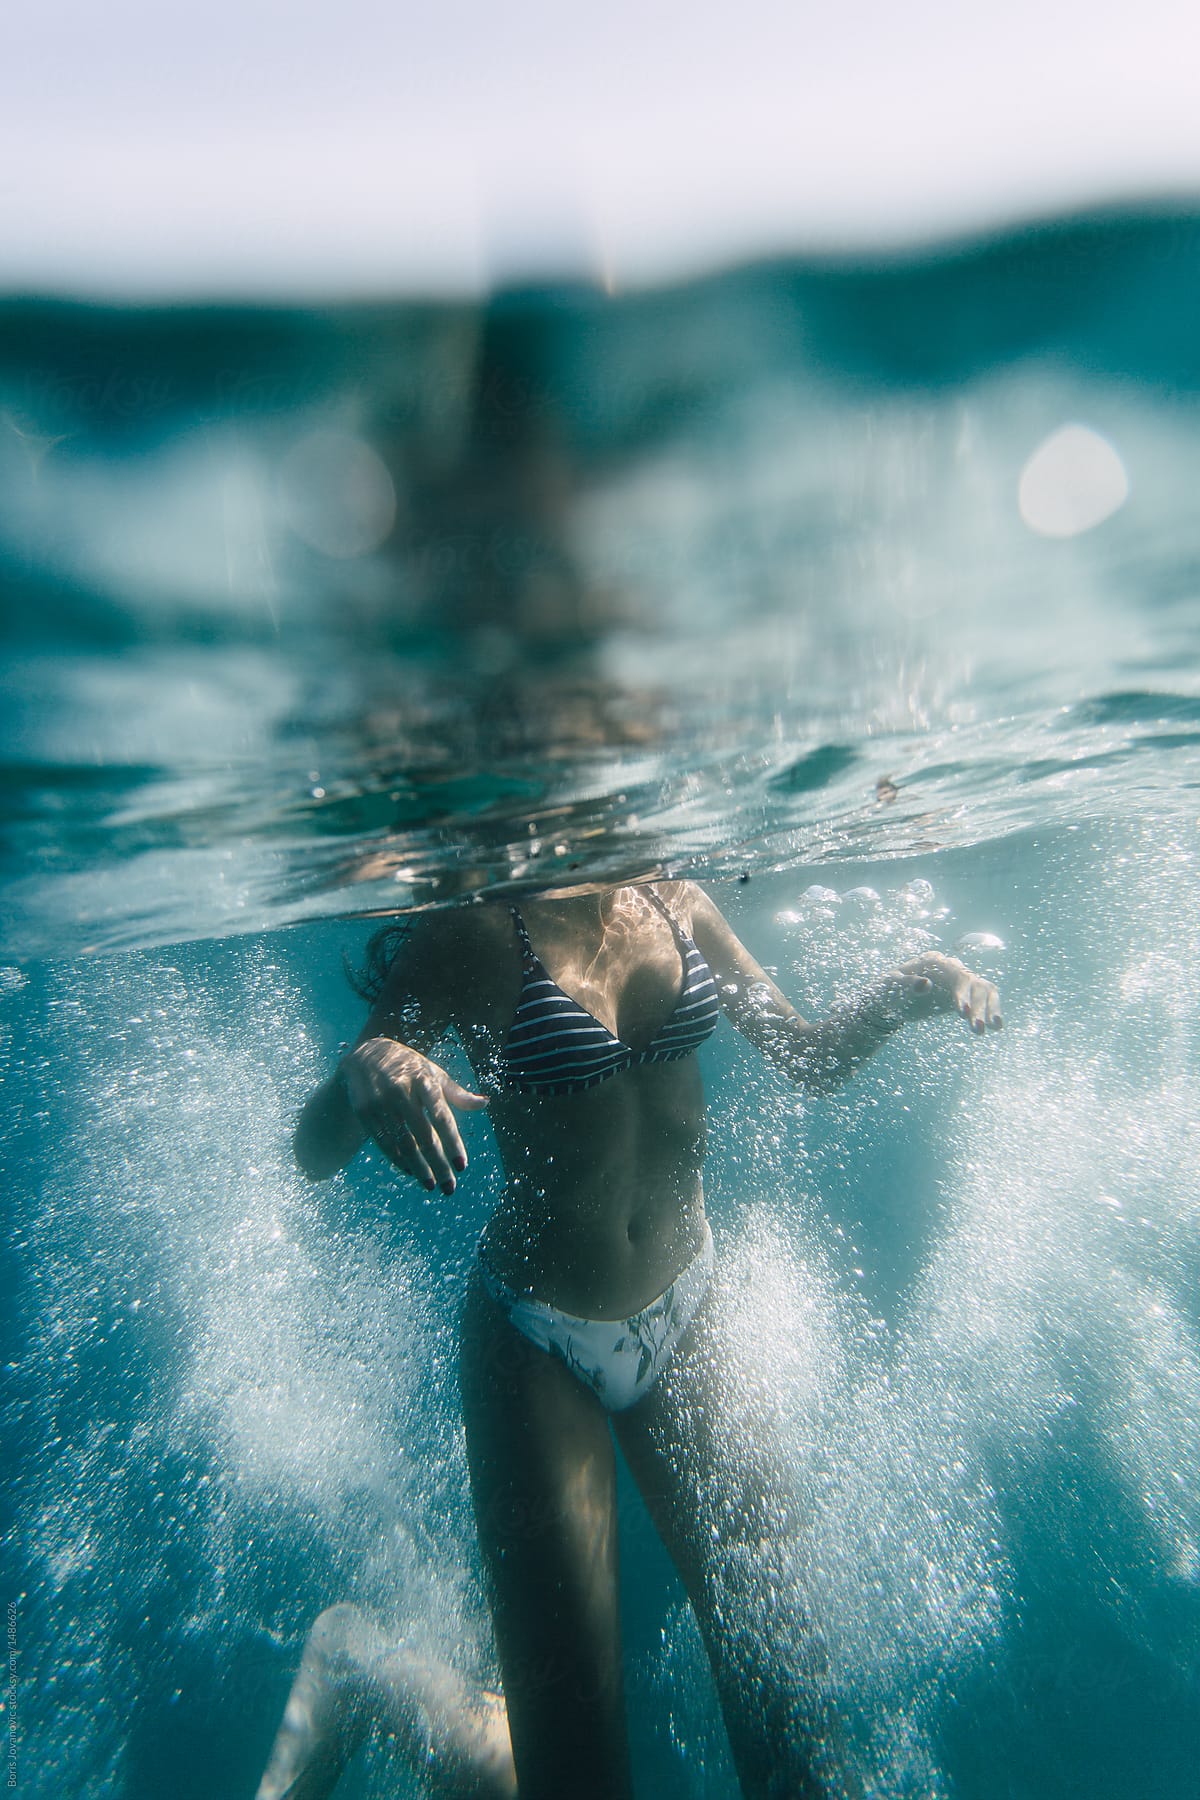 Crop Woman Wetting Legs In Sea Water by Stocksy Contributor